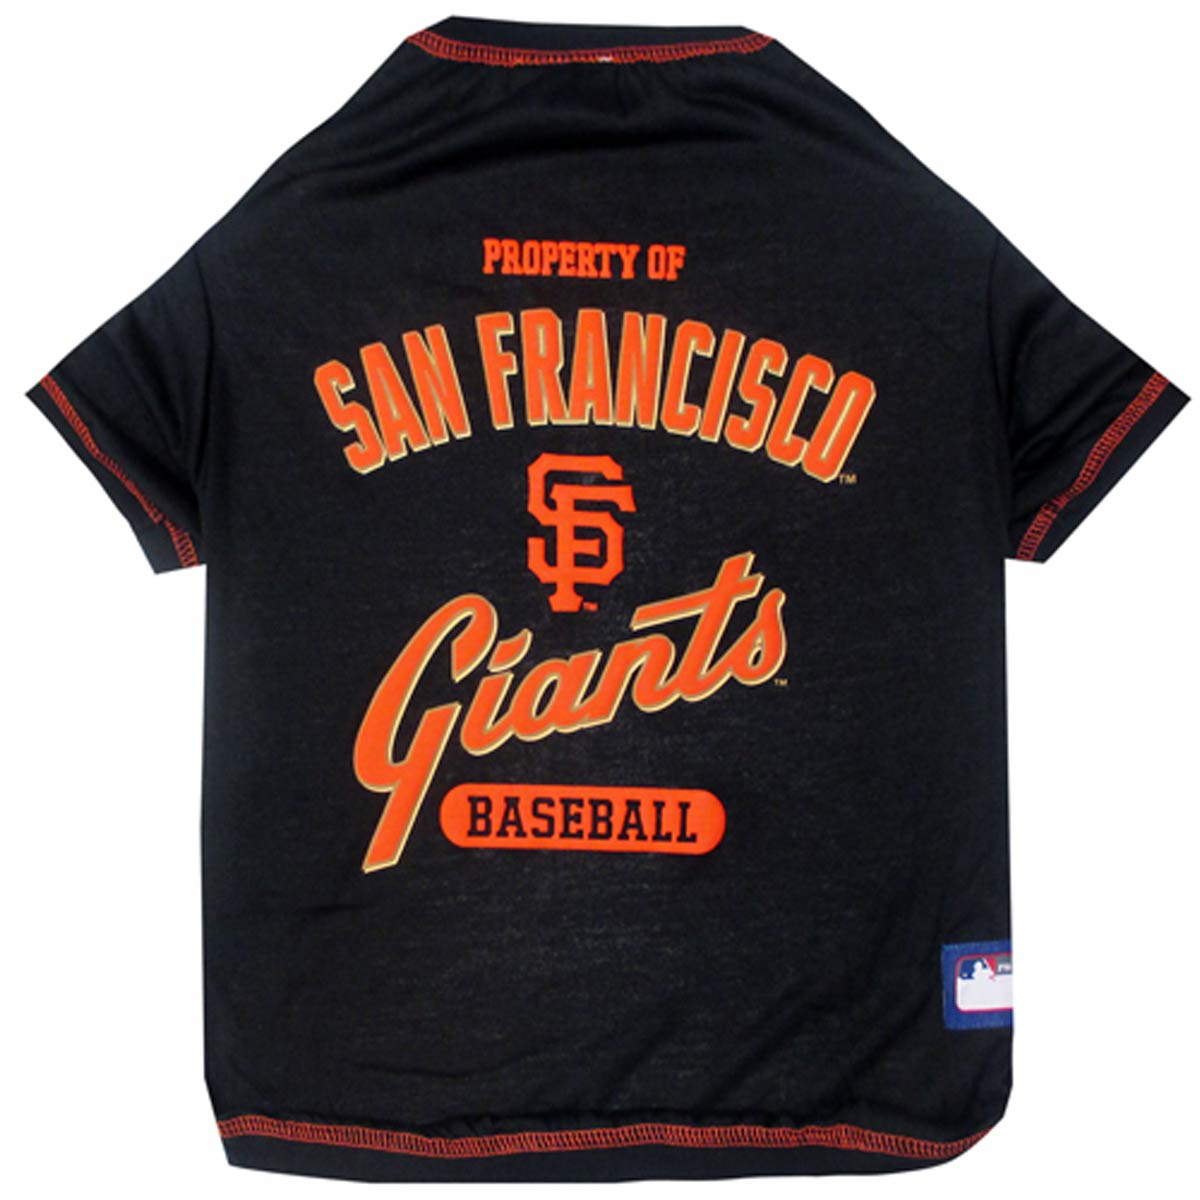 San Francisco Giants Dog T-Shirt - Black